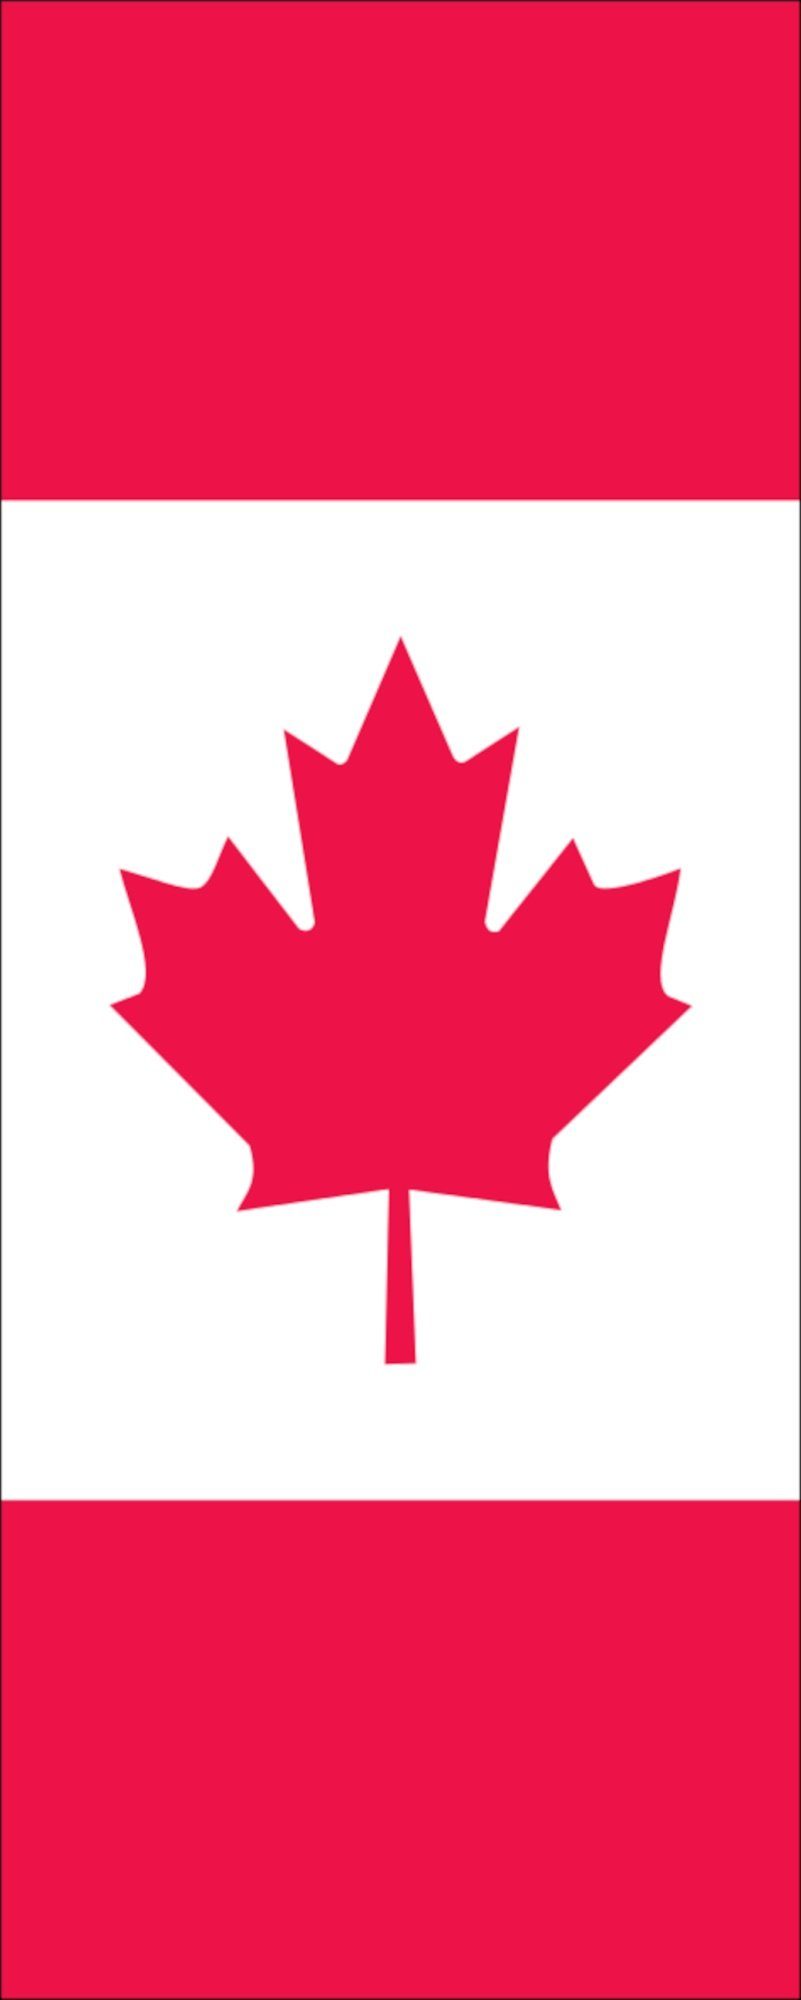 flaggenmeer 160 Kanada g/m² Flagge Hochformat